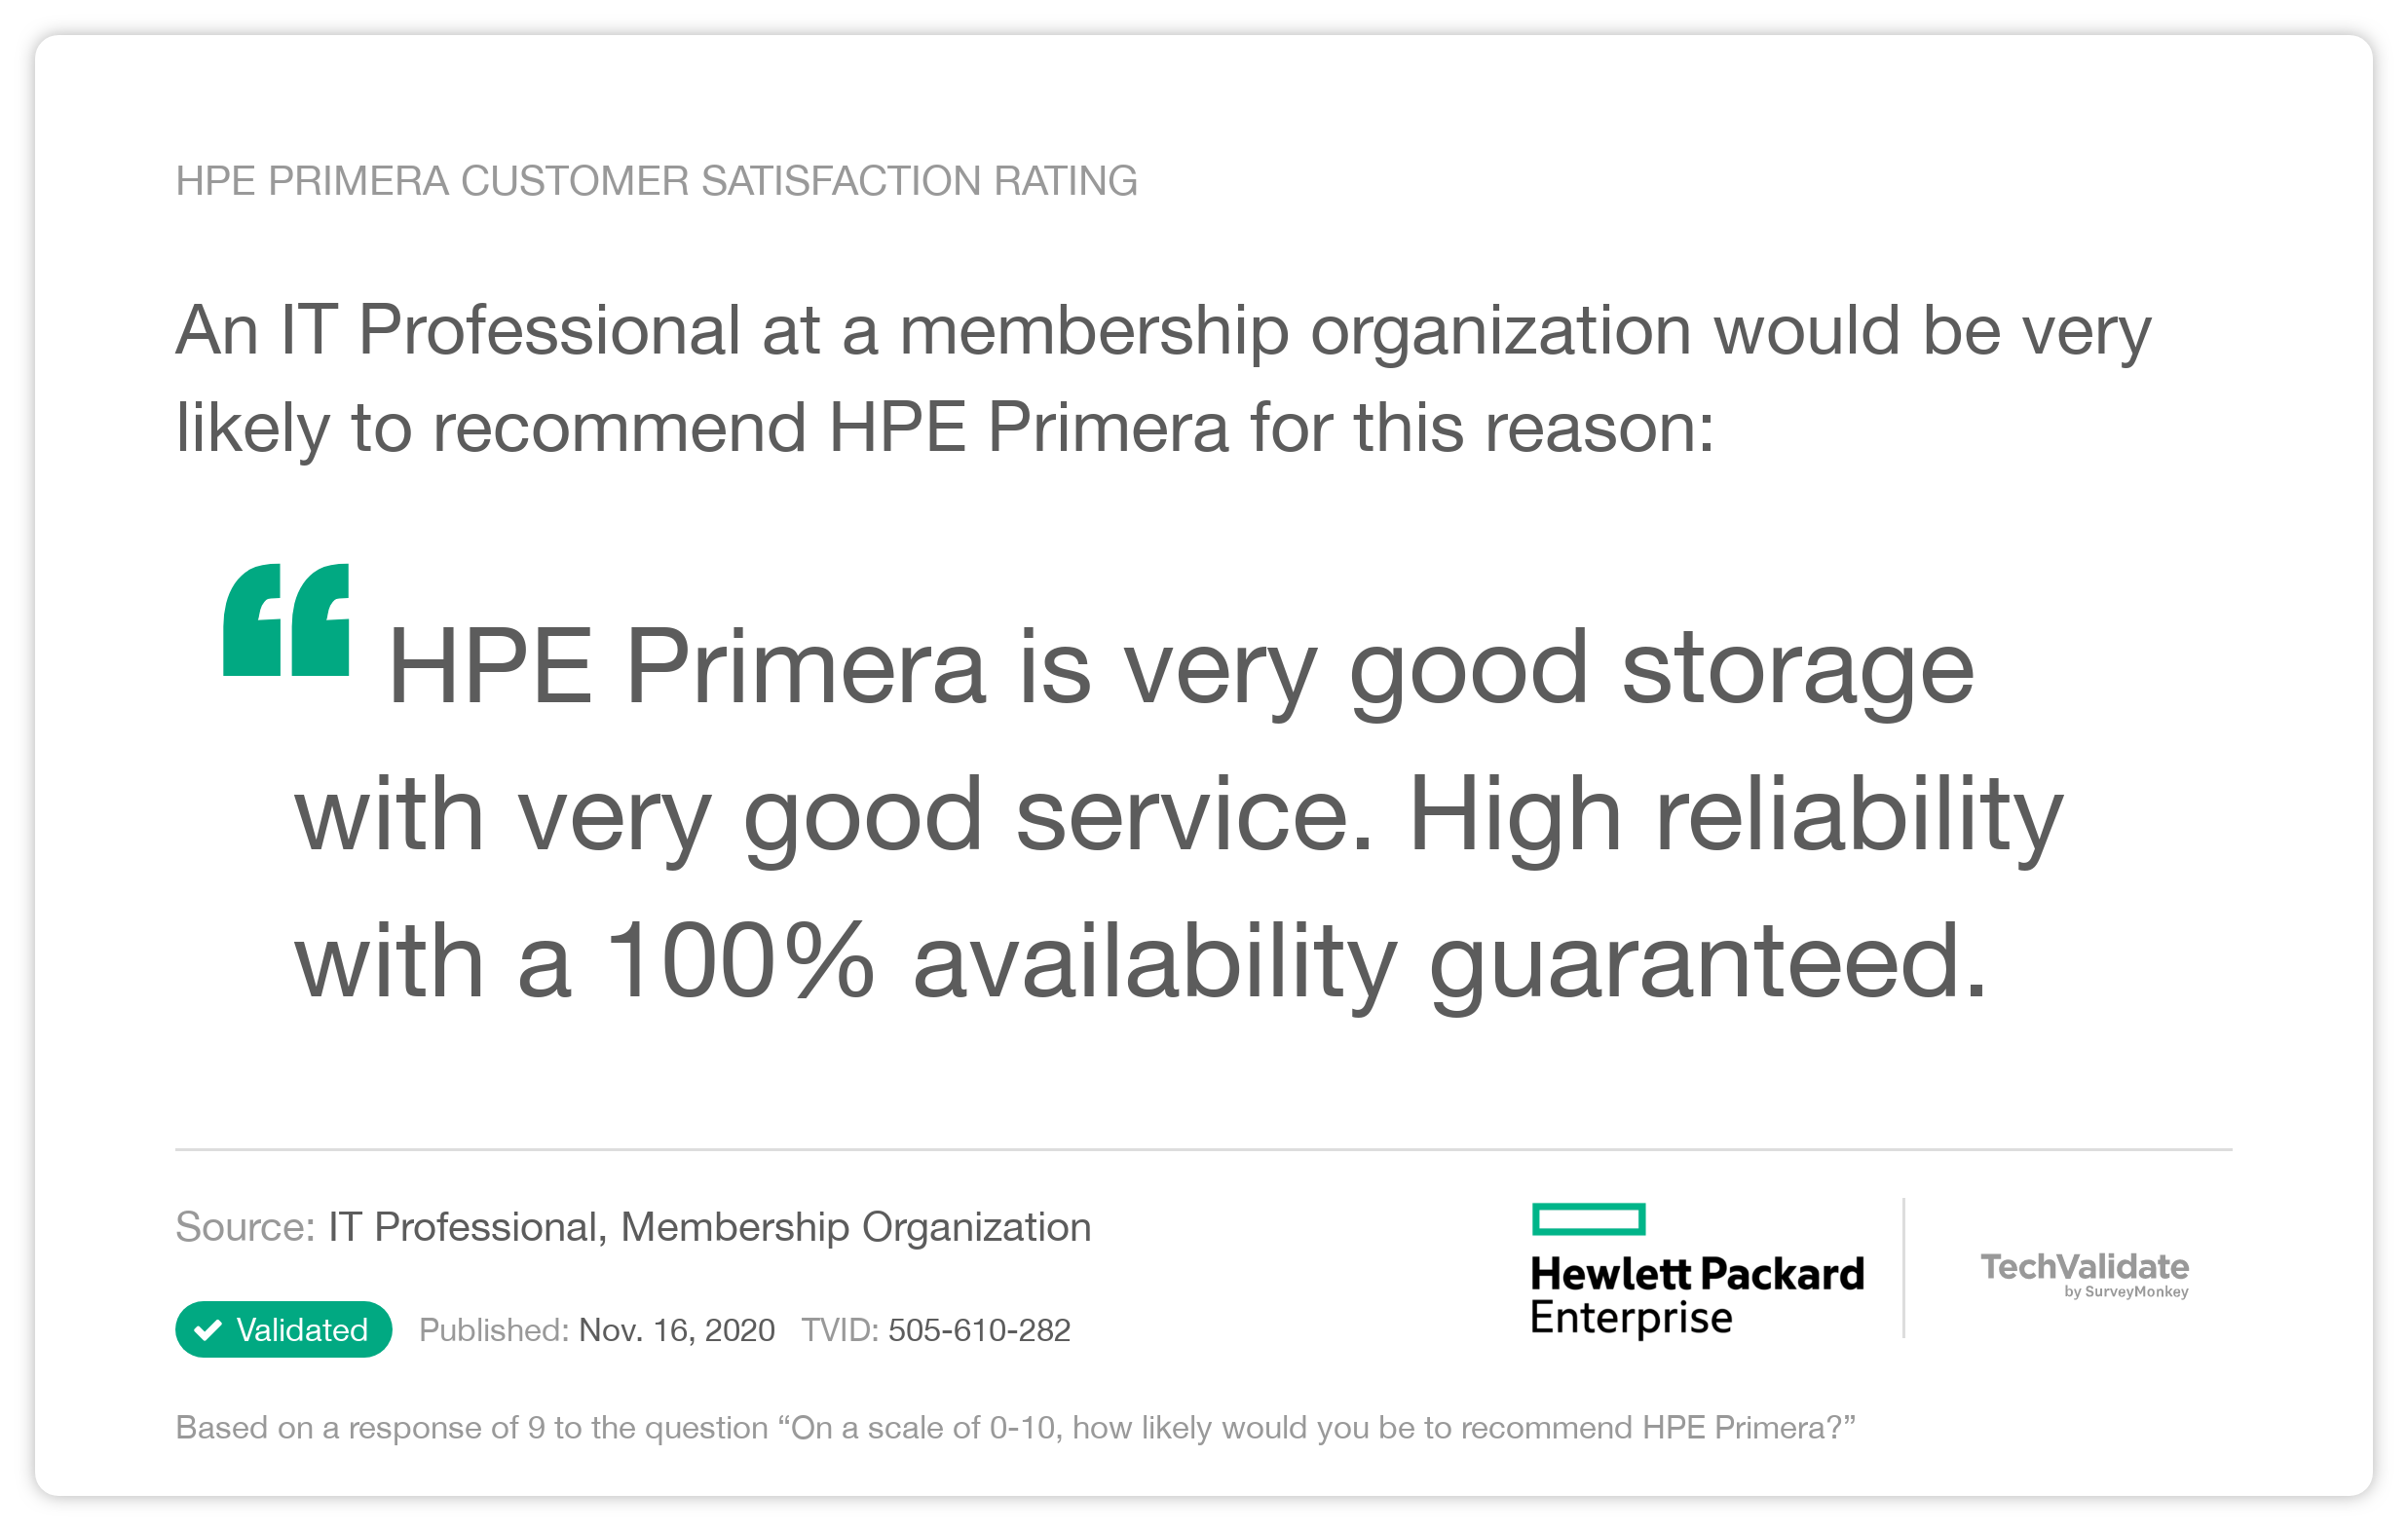 HPE Primera Customer Satisfaction Rating